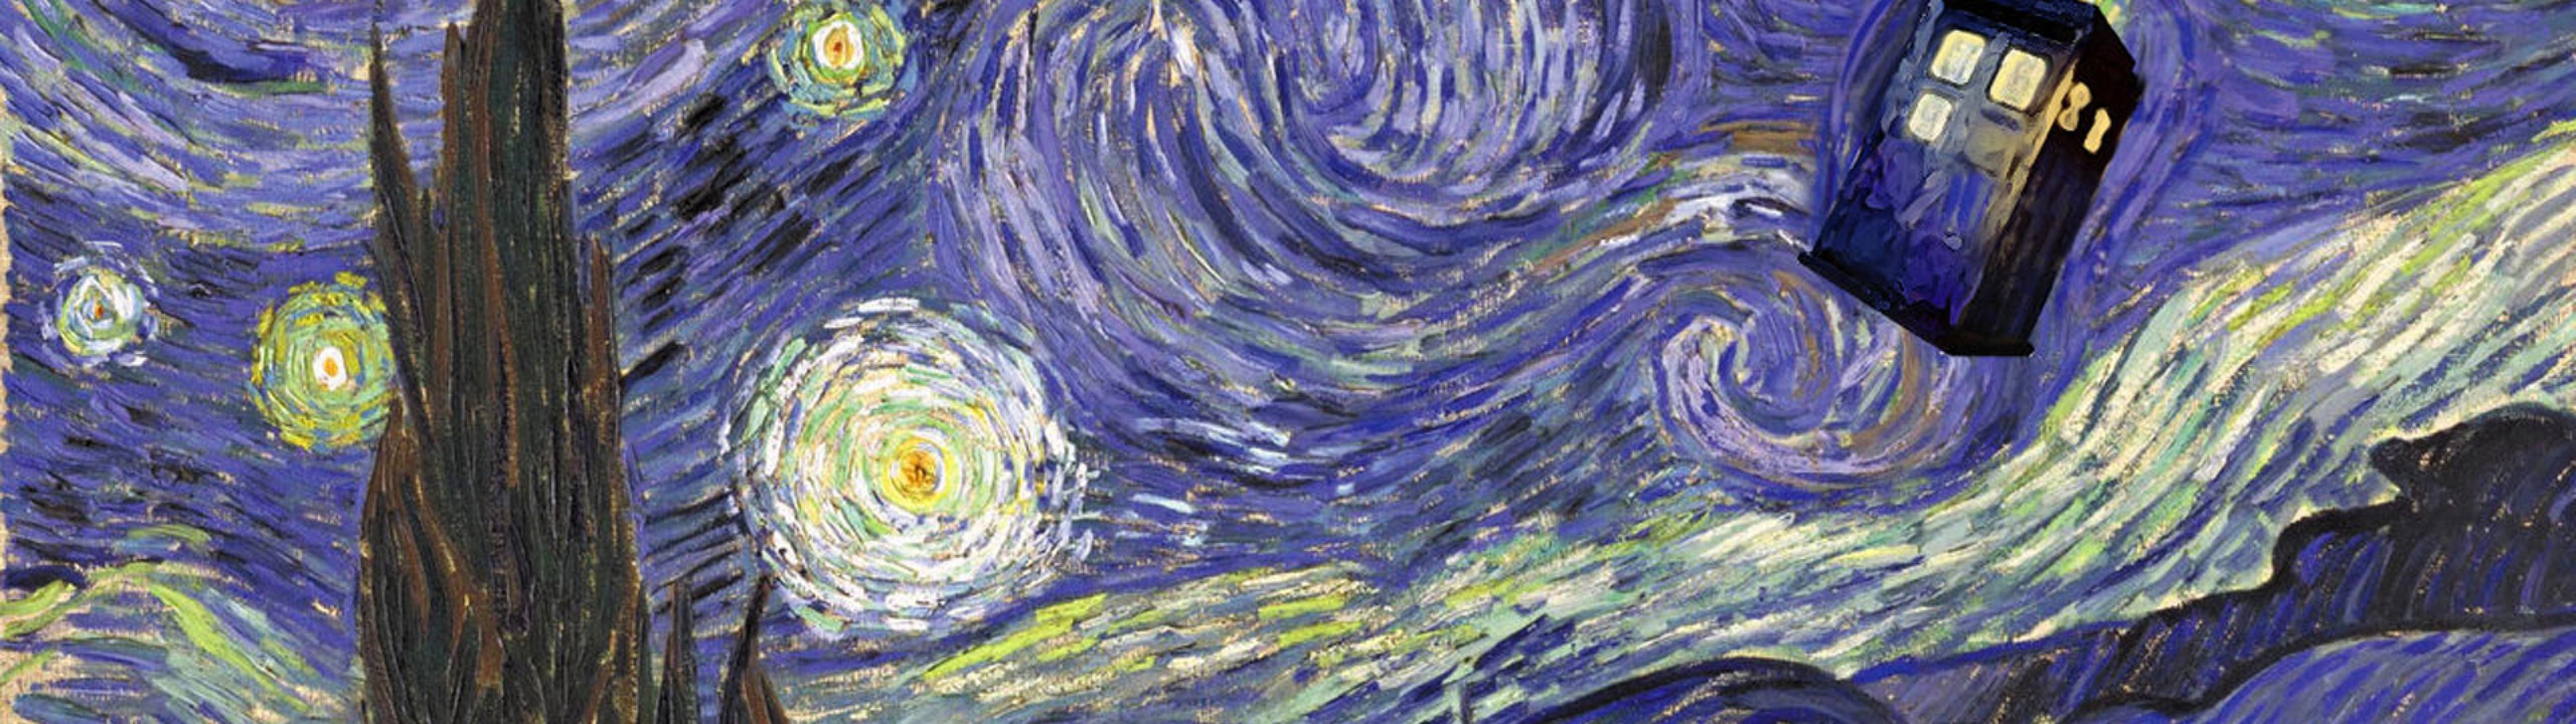 3840x1080 Van Gogh Desktop Wallpapers - Wallpaper Cave ...